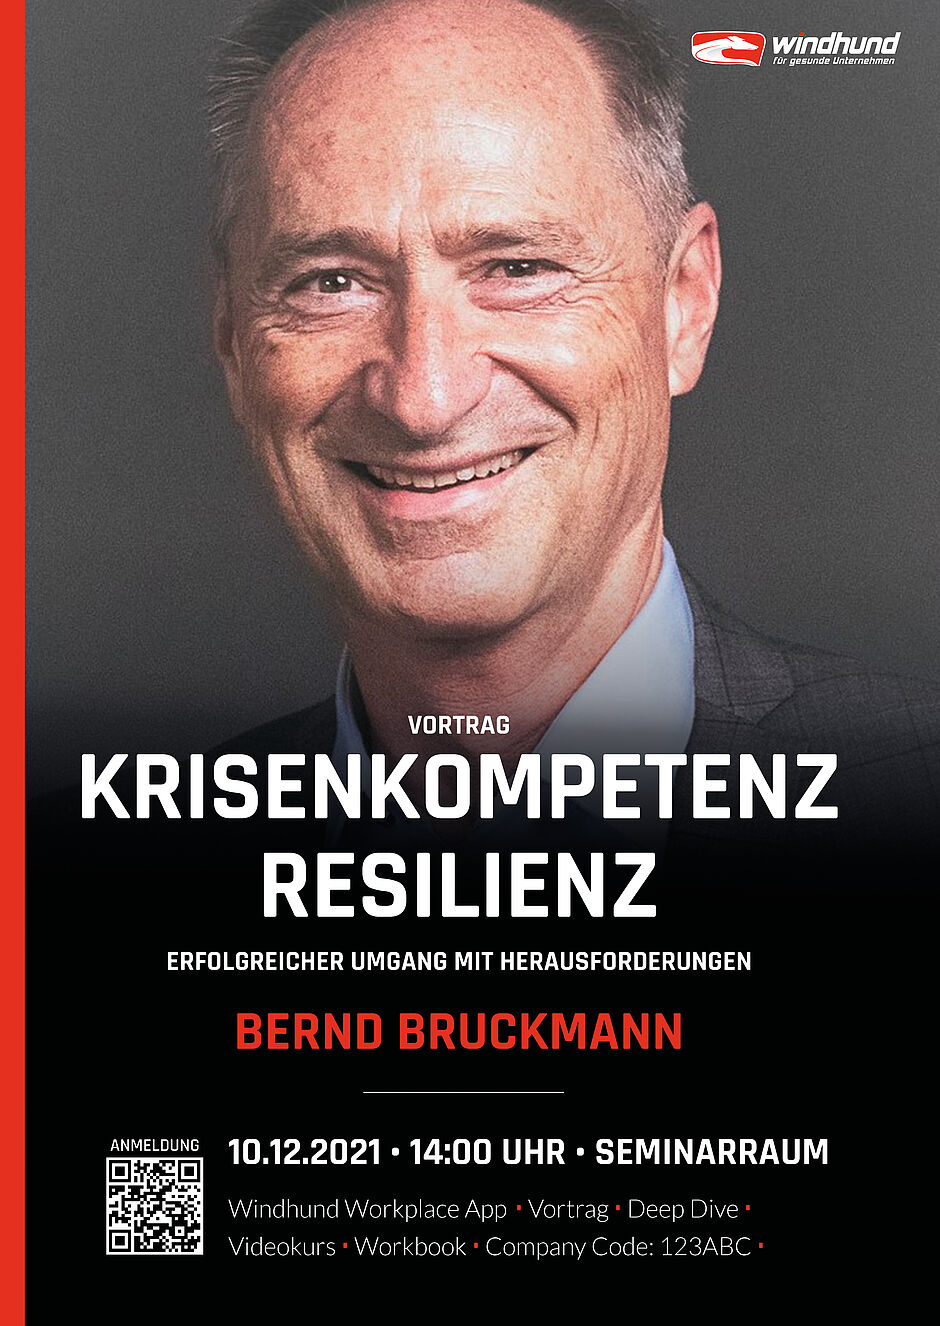 Windhund Experte Bernd Bruckmann